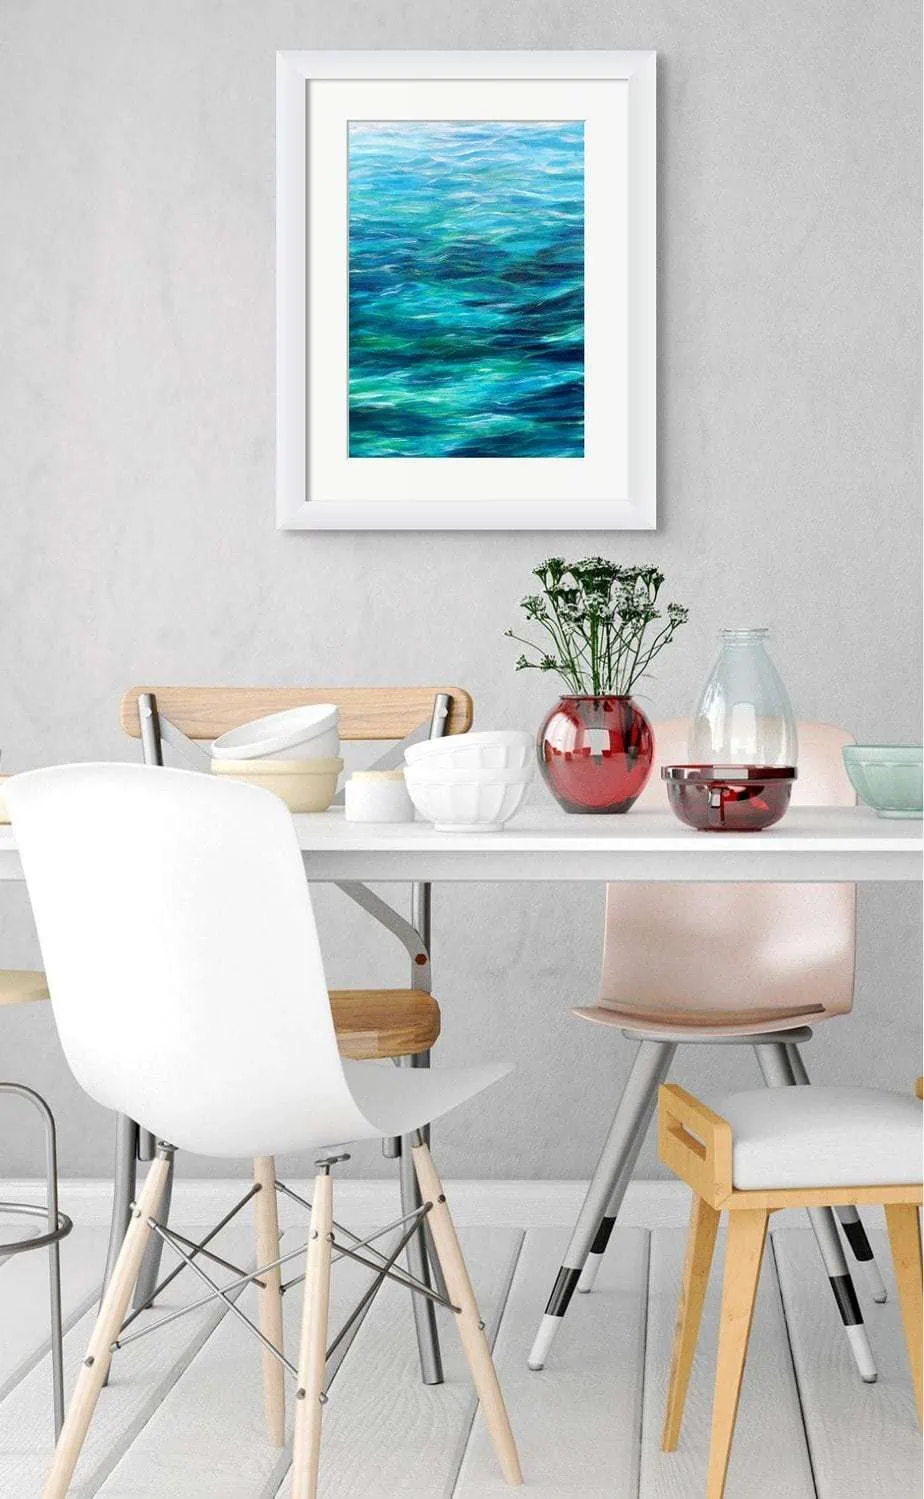 Turquoise Sea II A3 Print in a room setting